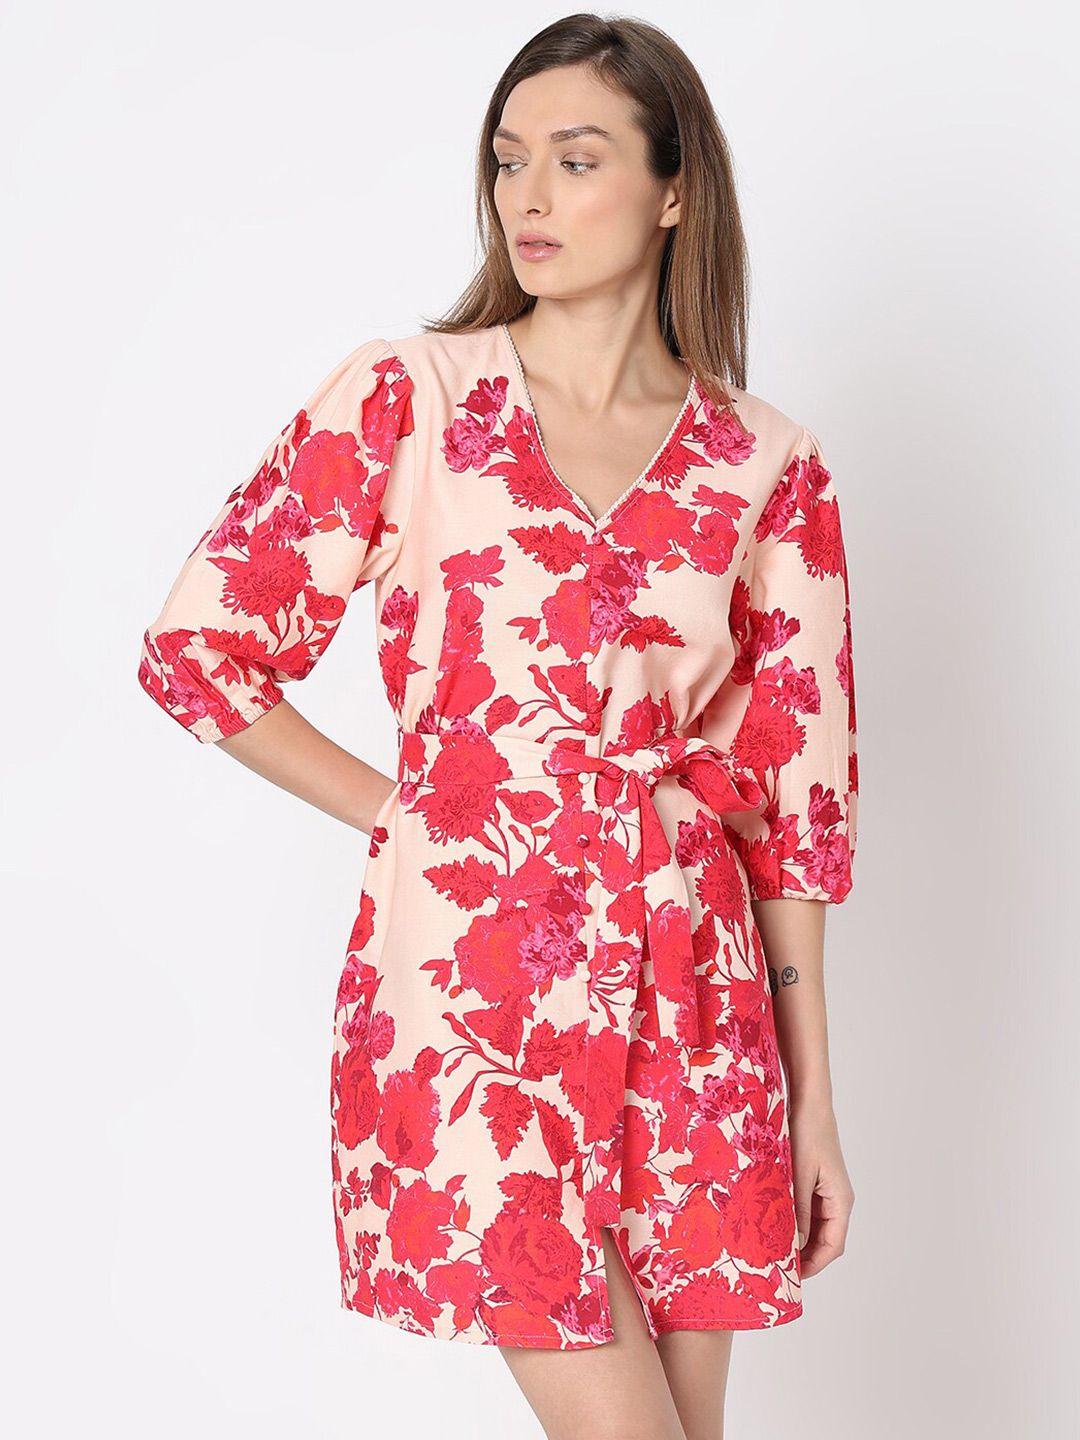 vero moda floral printed pure cotton a-line dress